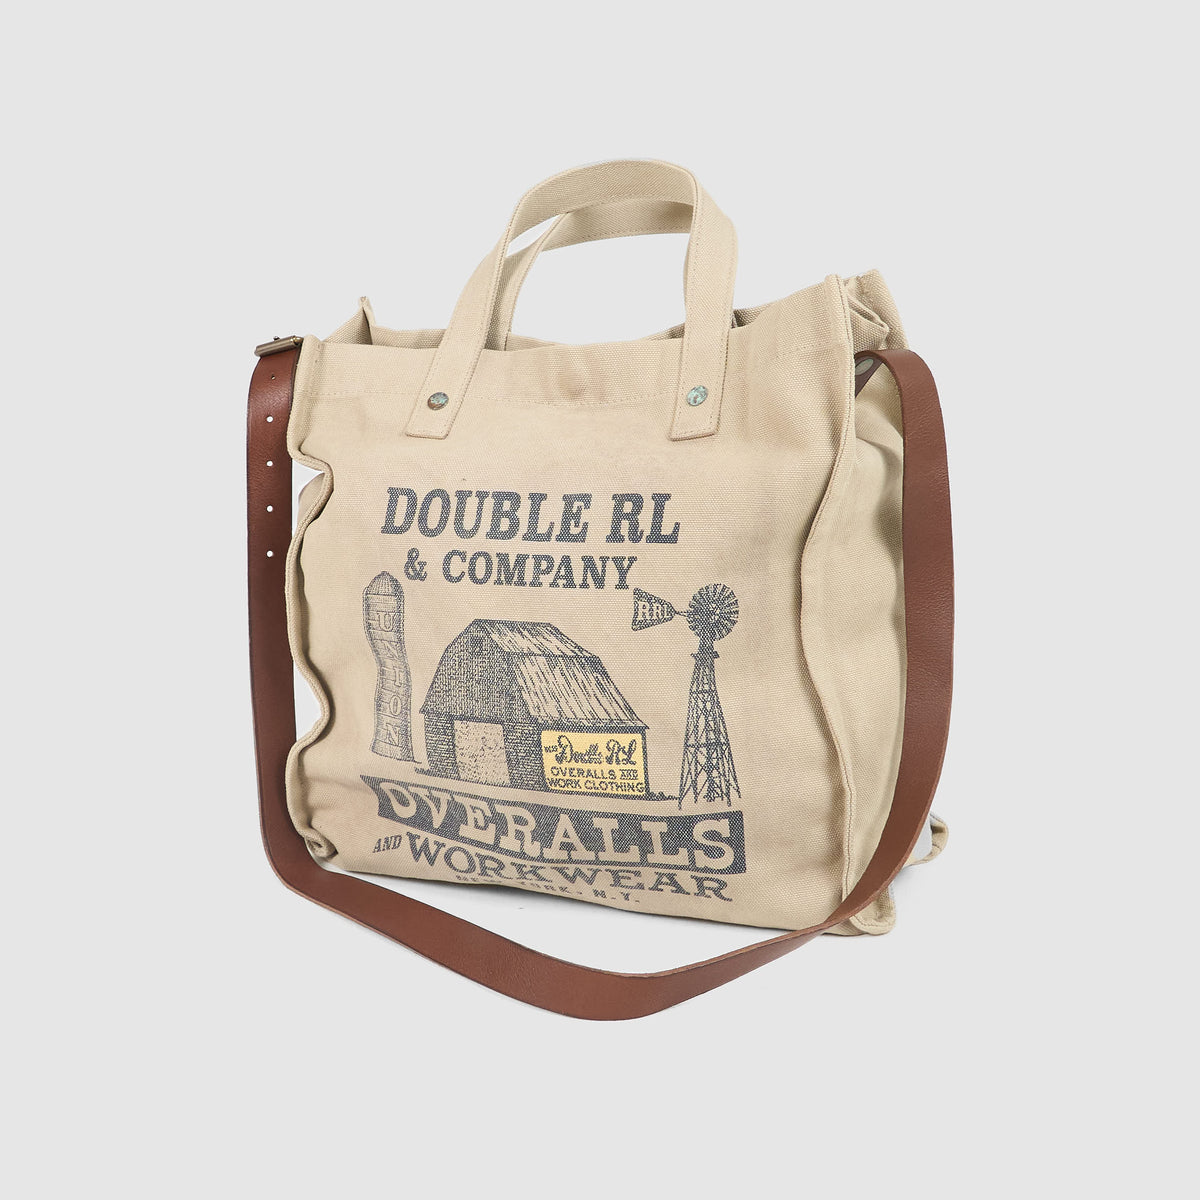 Double RL Market Carpenter Medium Overalls Tote Bag